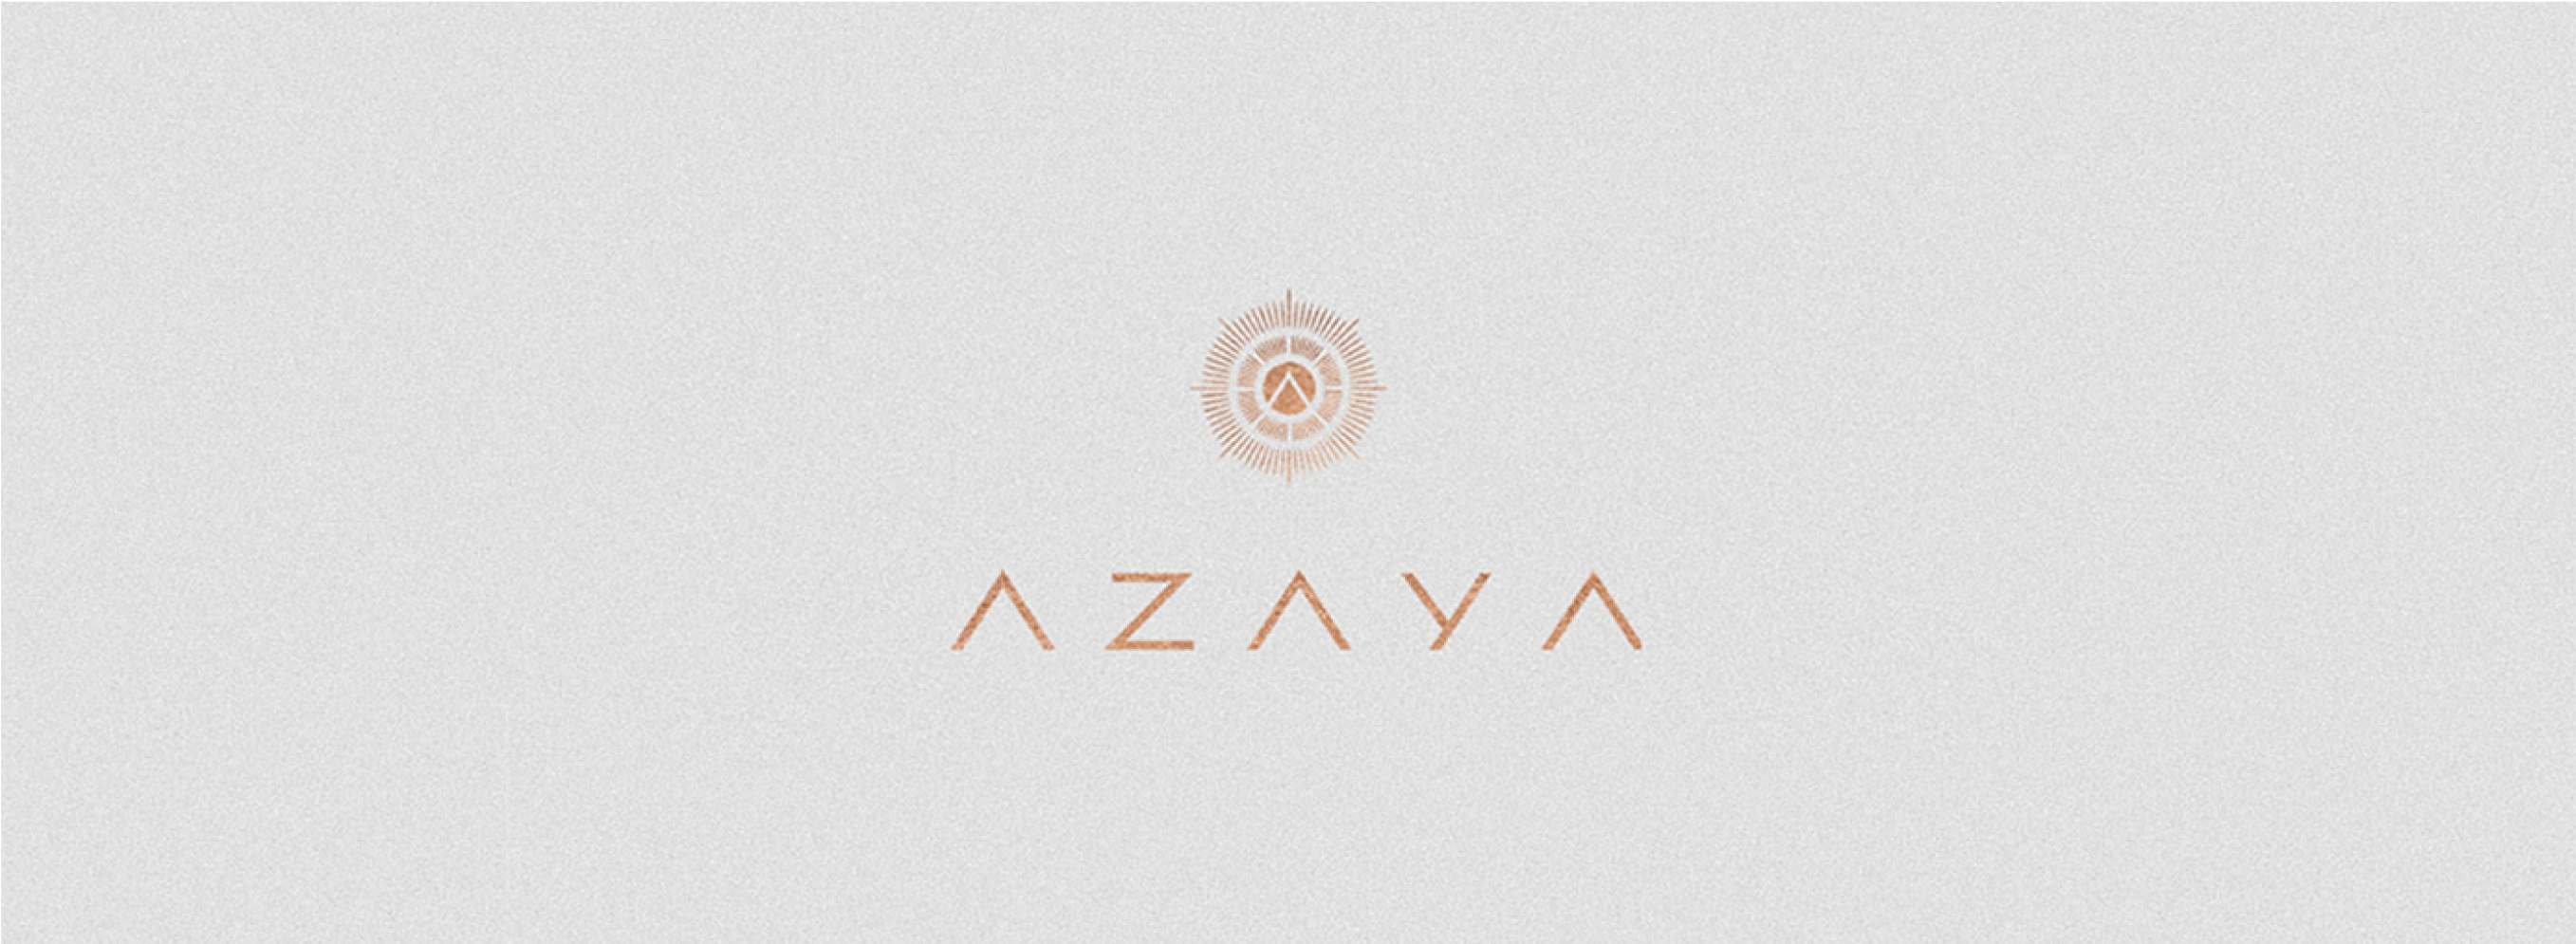 AZAYA cover